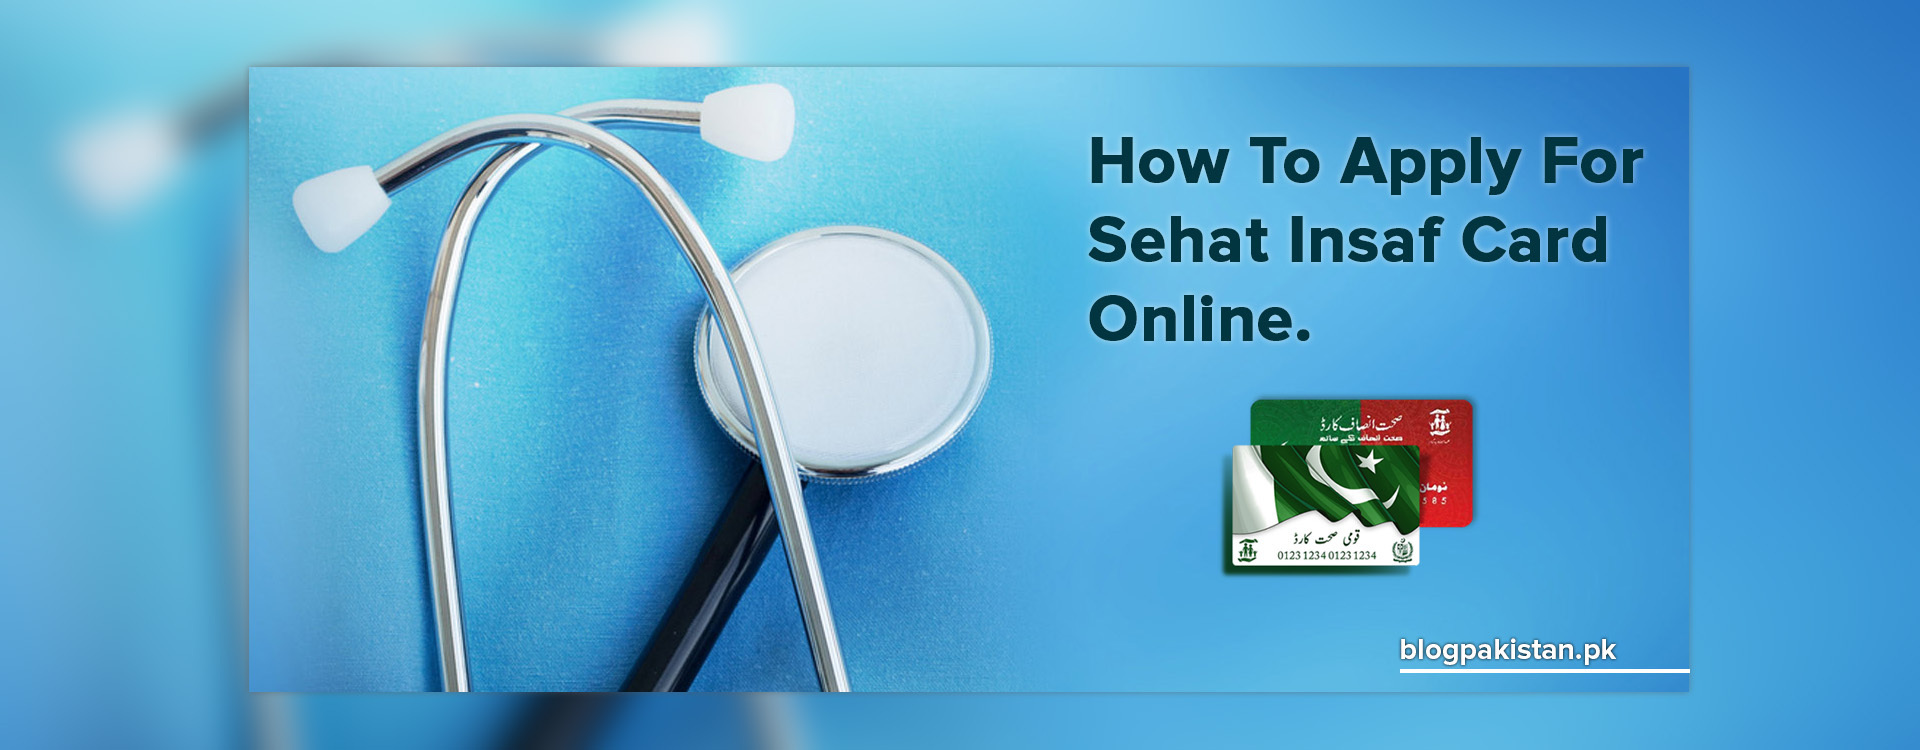 Sehat Insaf Card: Eligibility Criteria, Info, & Hospitals